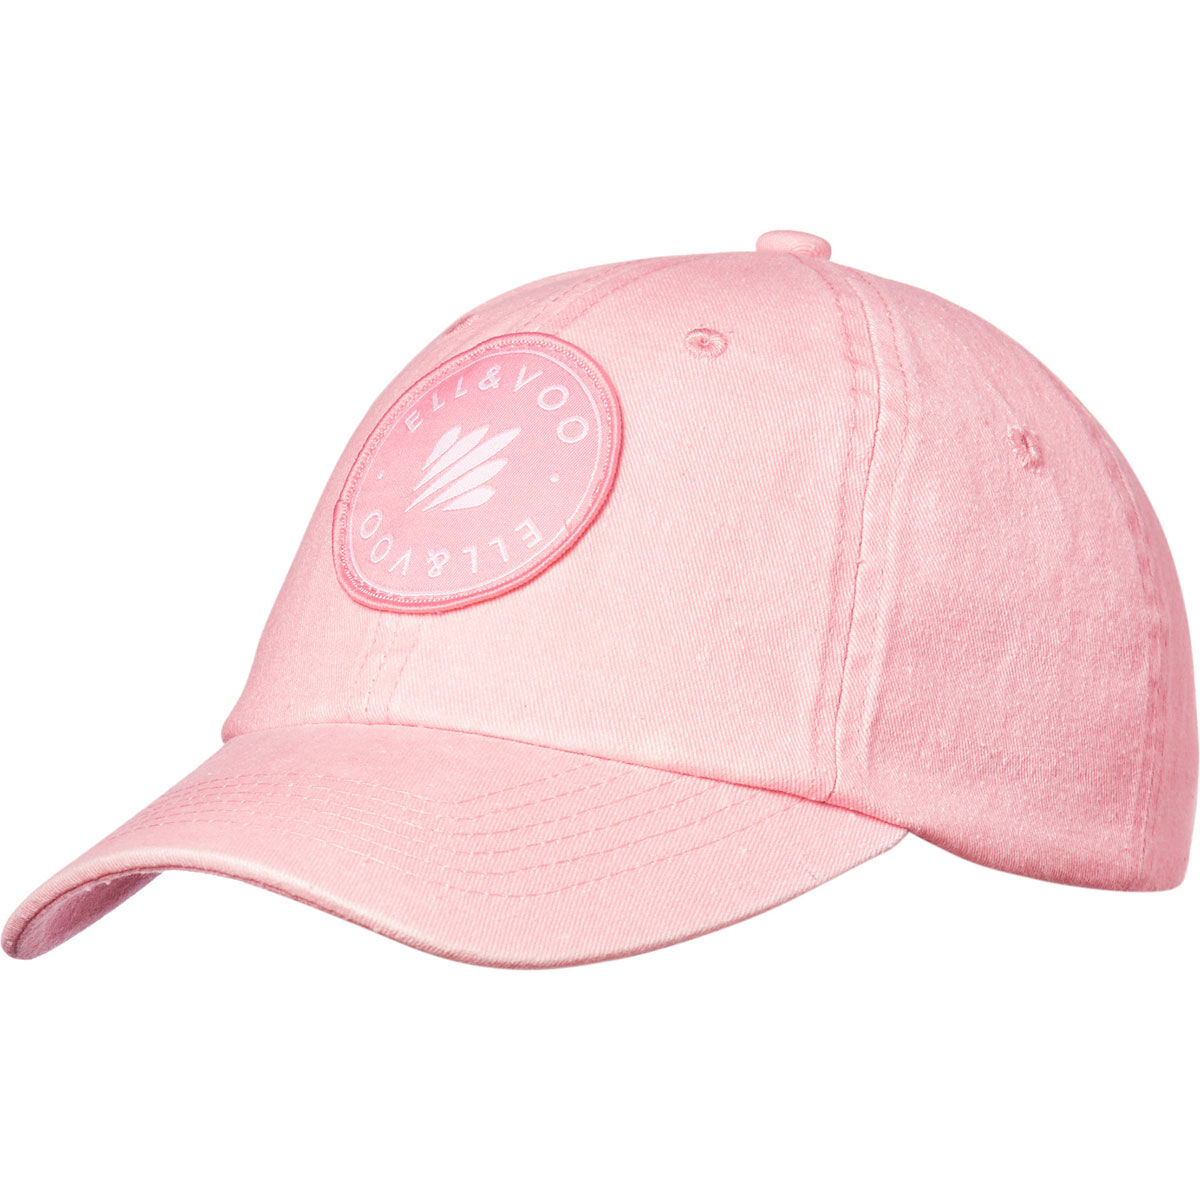 discount 64% Bershka Fuchsia pink cap WOMEN FASHION Accessories Hat and cap Pink Pink Single 